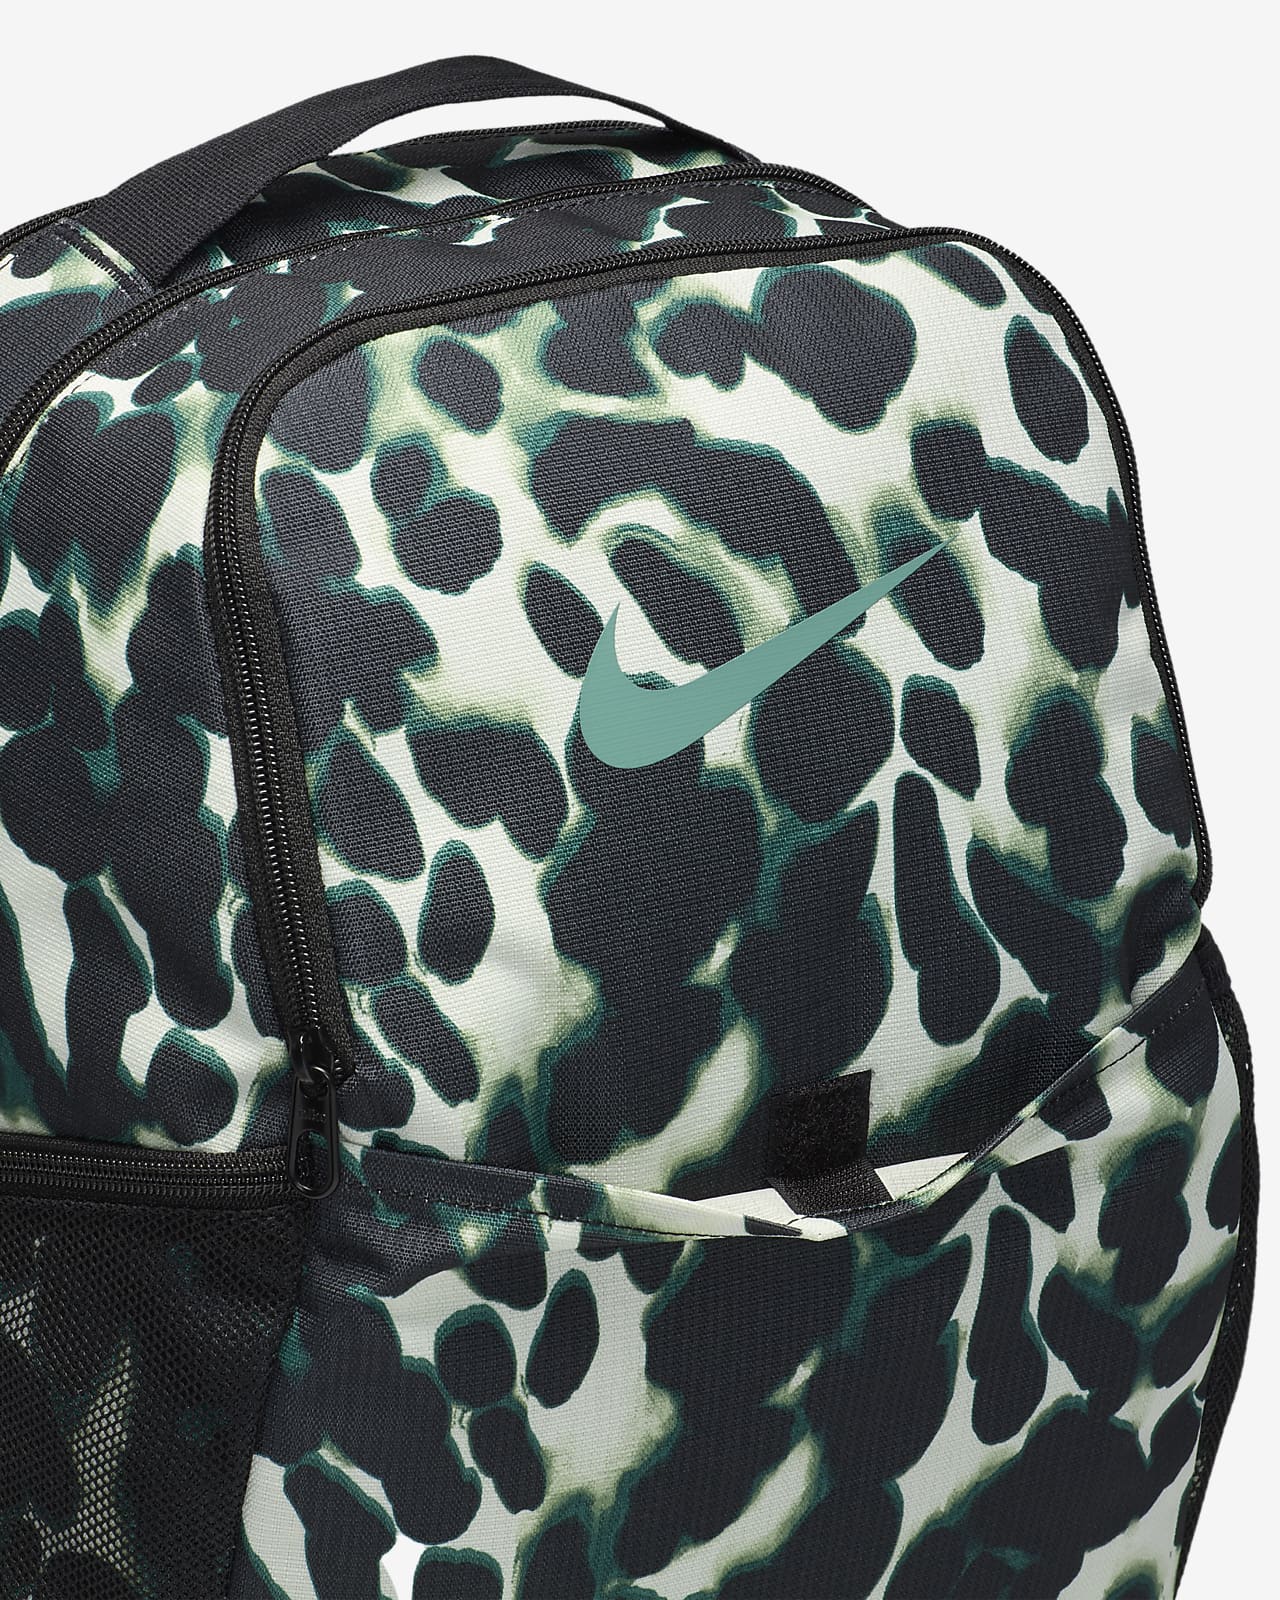 The Nike Yoga One backpack will - Myanmar Sporting House